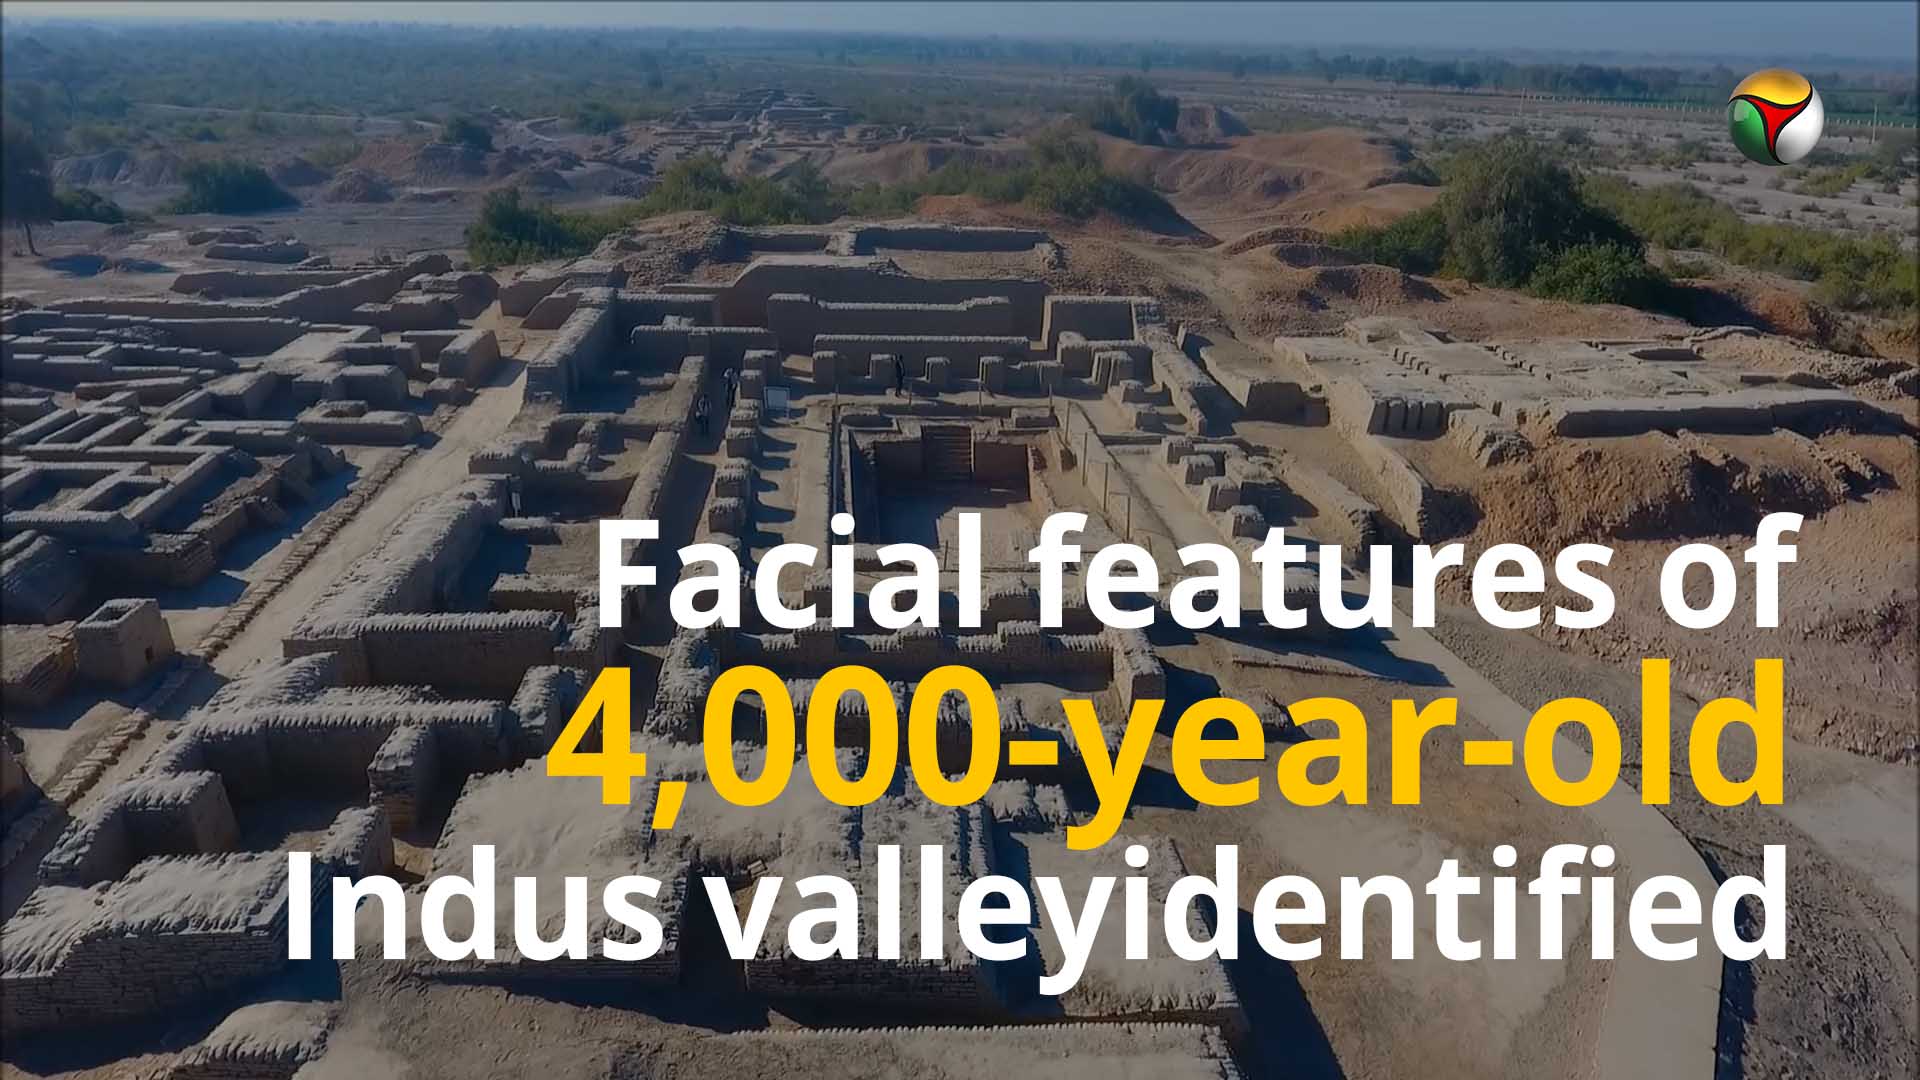 Tech helps identify looks of Indus Valley inhabitants